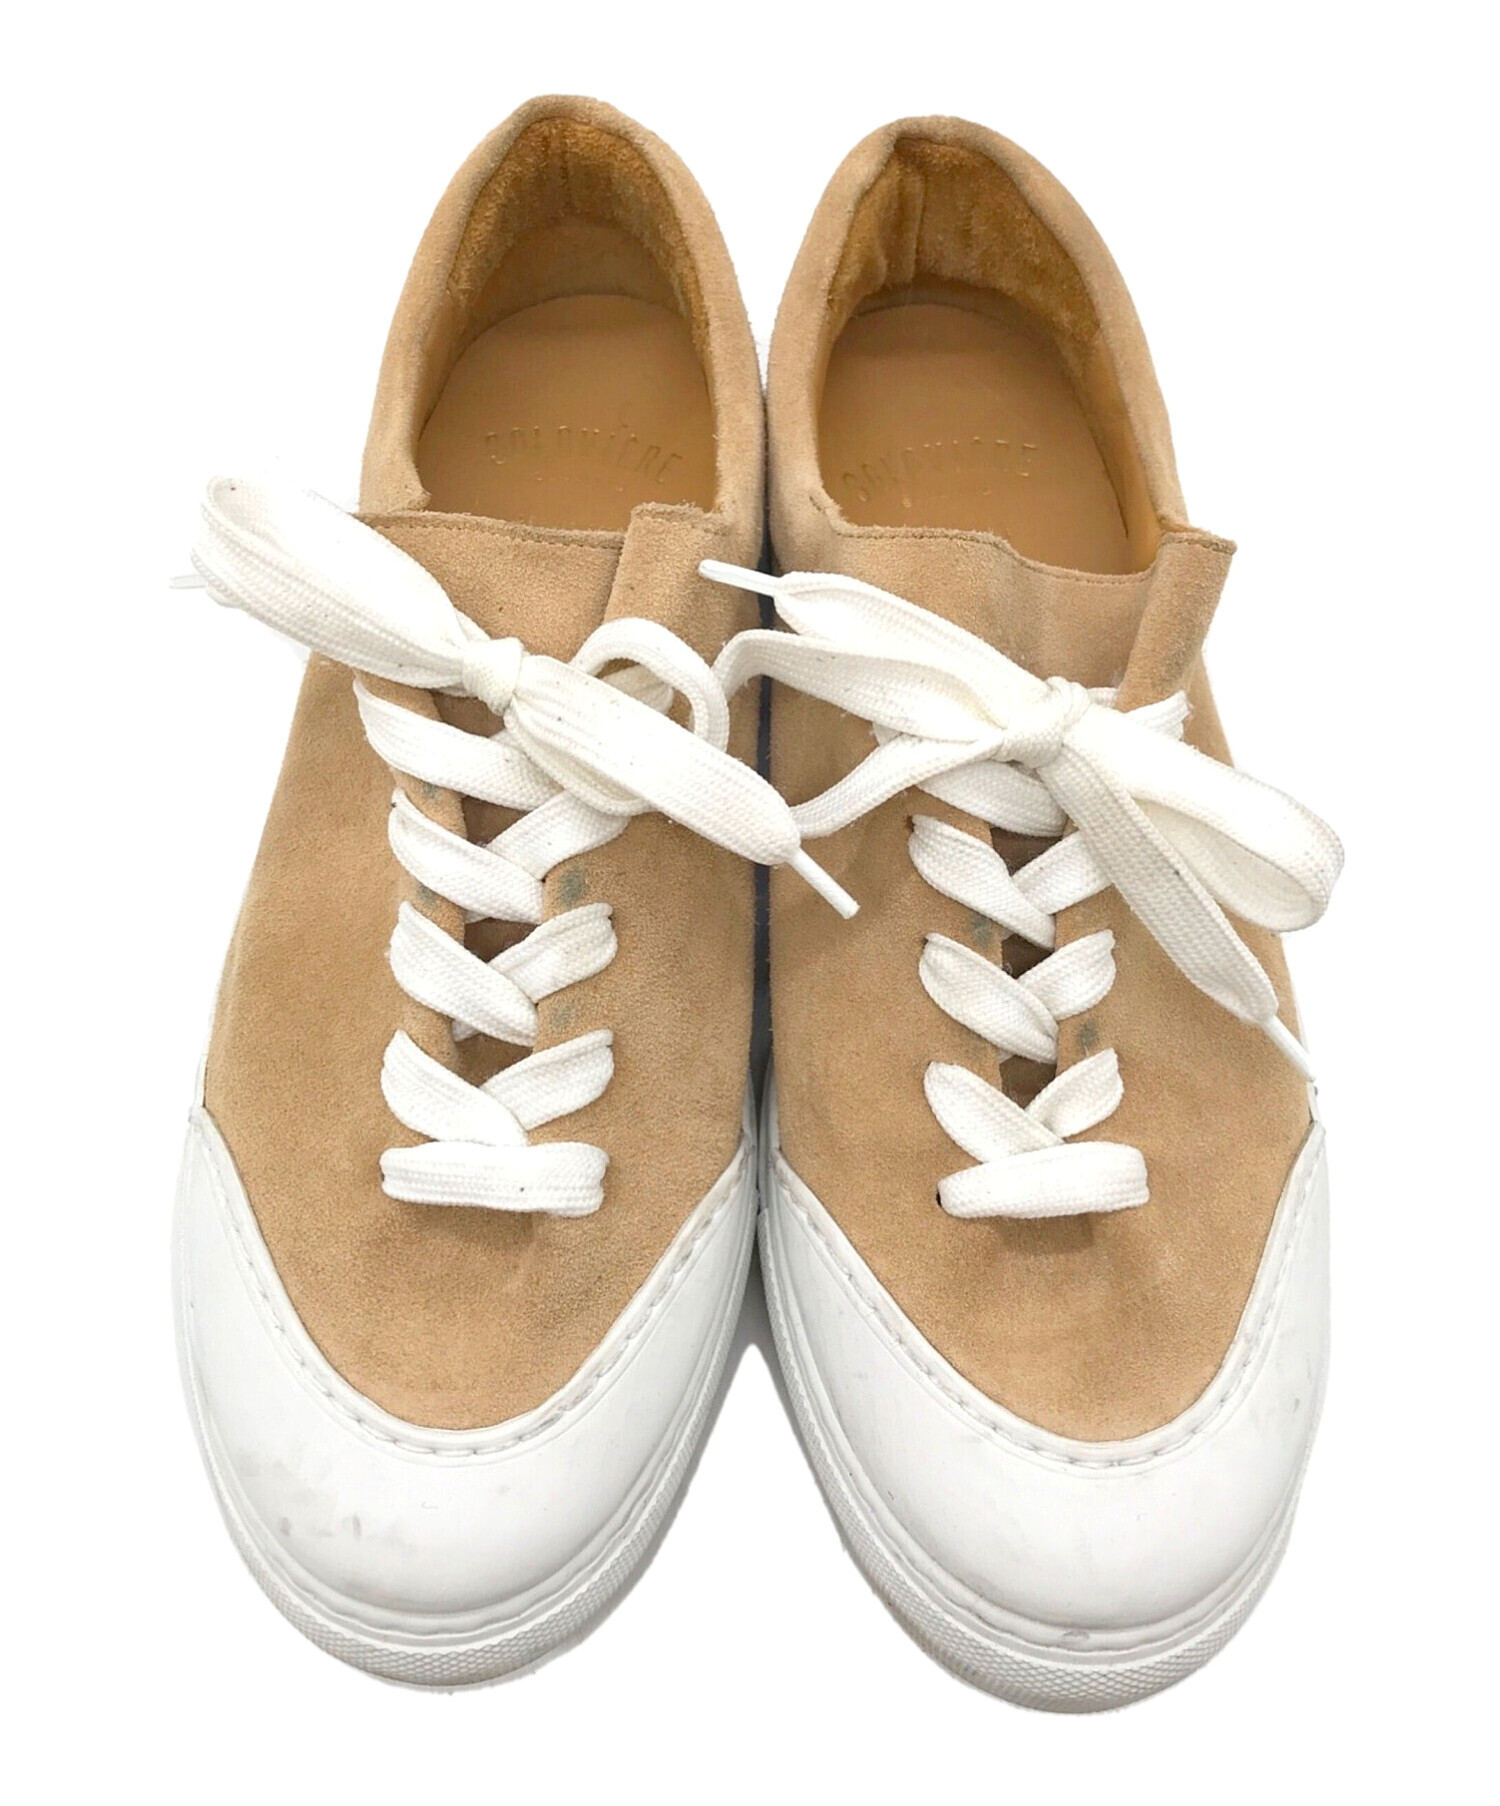 SOLOVIERE White サイズ40 - 靴